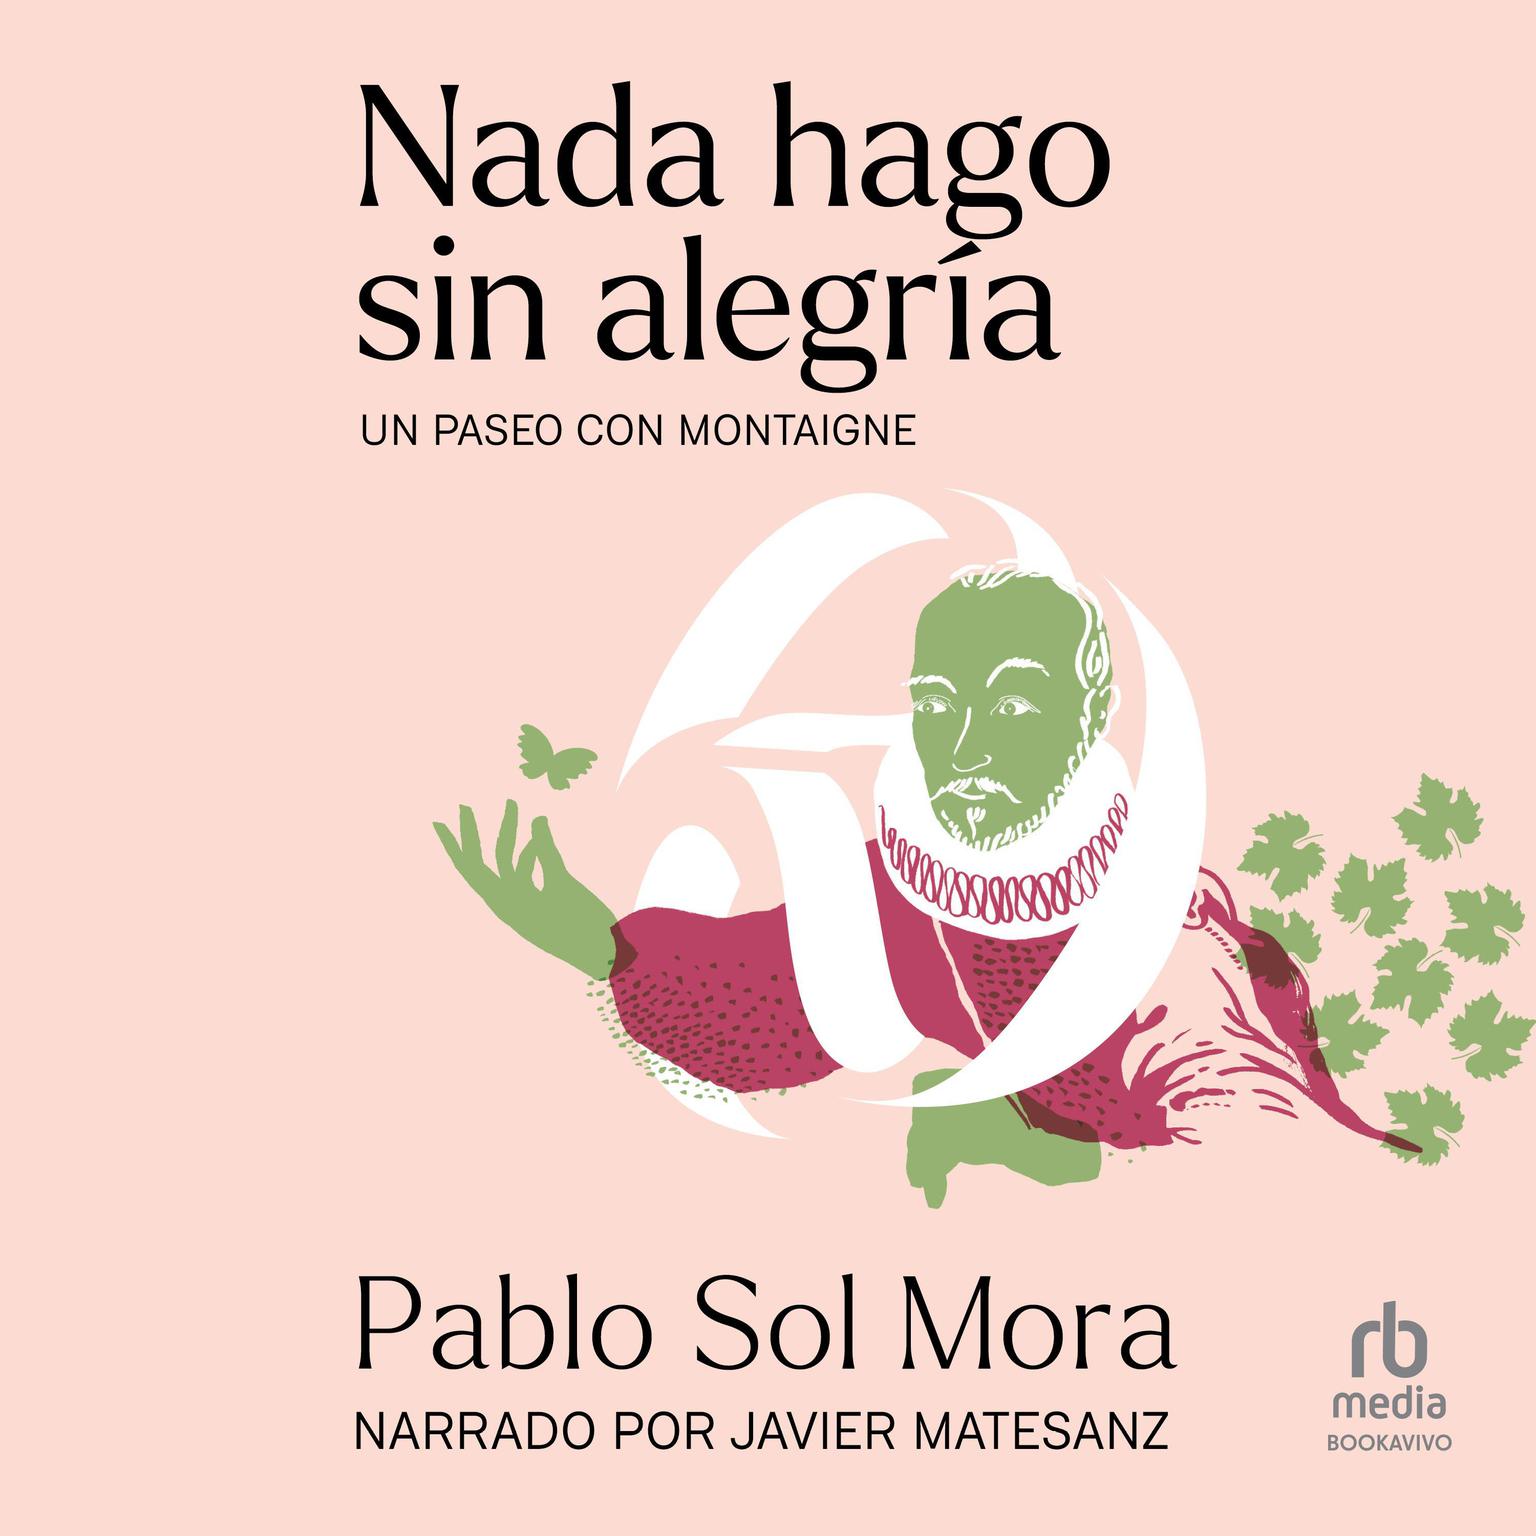 Nada hago sin alegría (Doing Everything with Cheer): Un paseo con Montaigne (A Walk with Montaigne) Audiobook, by Pablo Sol Mora